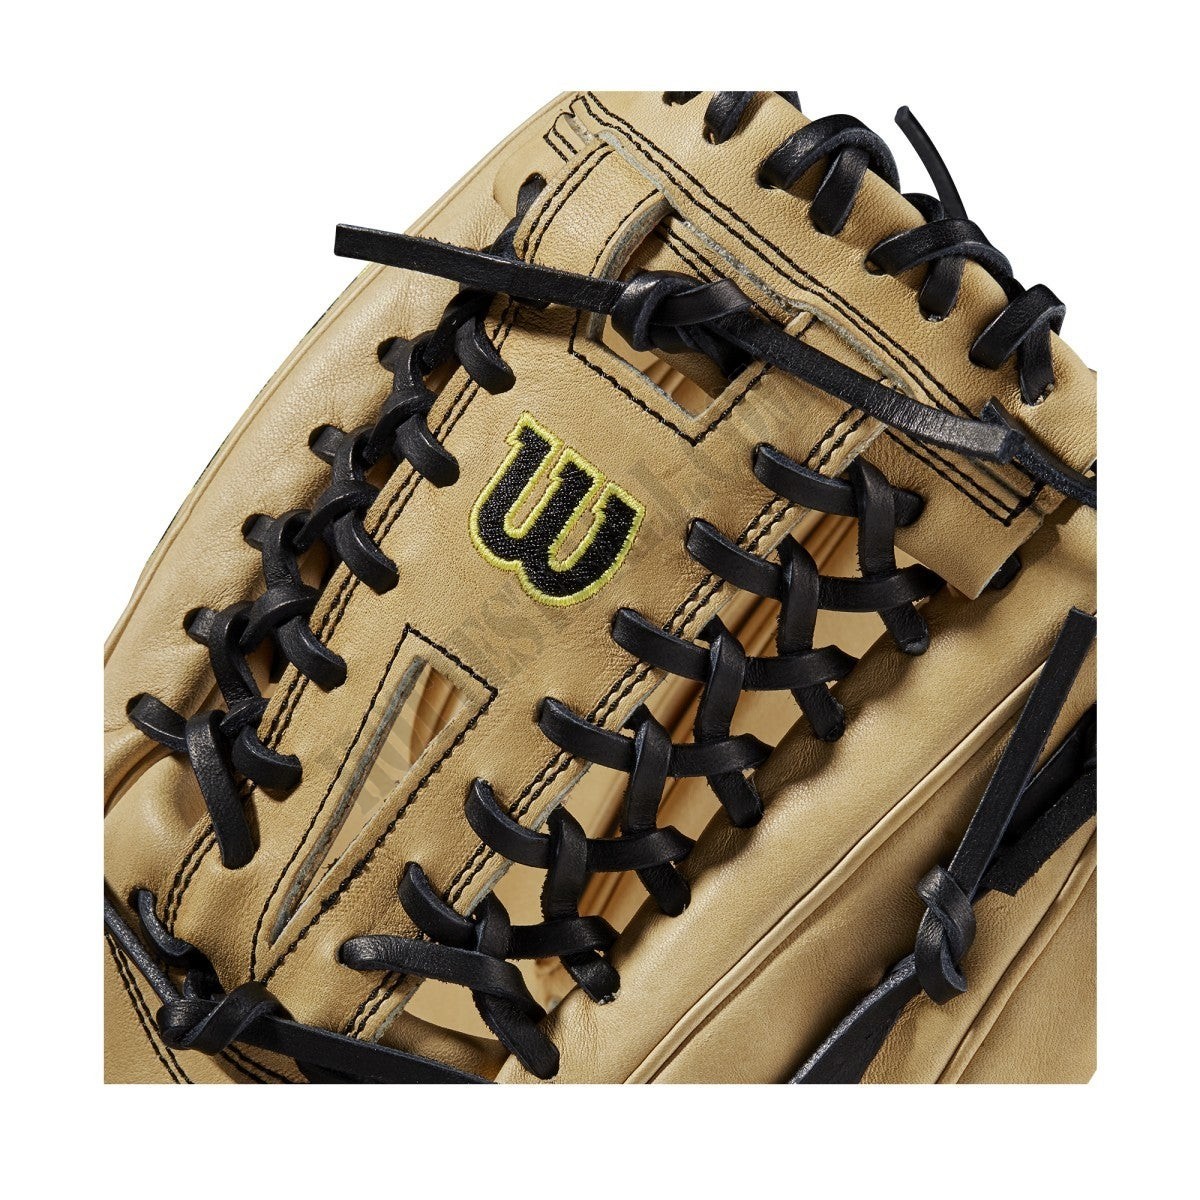 2021 A2000 A12 12" Pitcher's Baseball Glove ● Wilson Promotions - -5